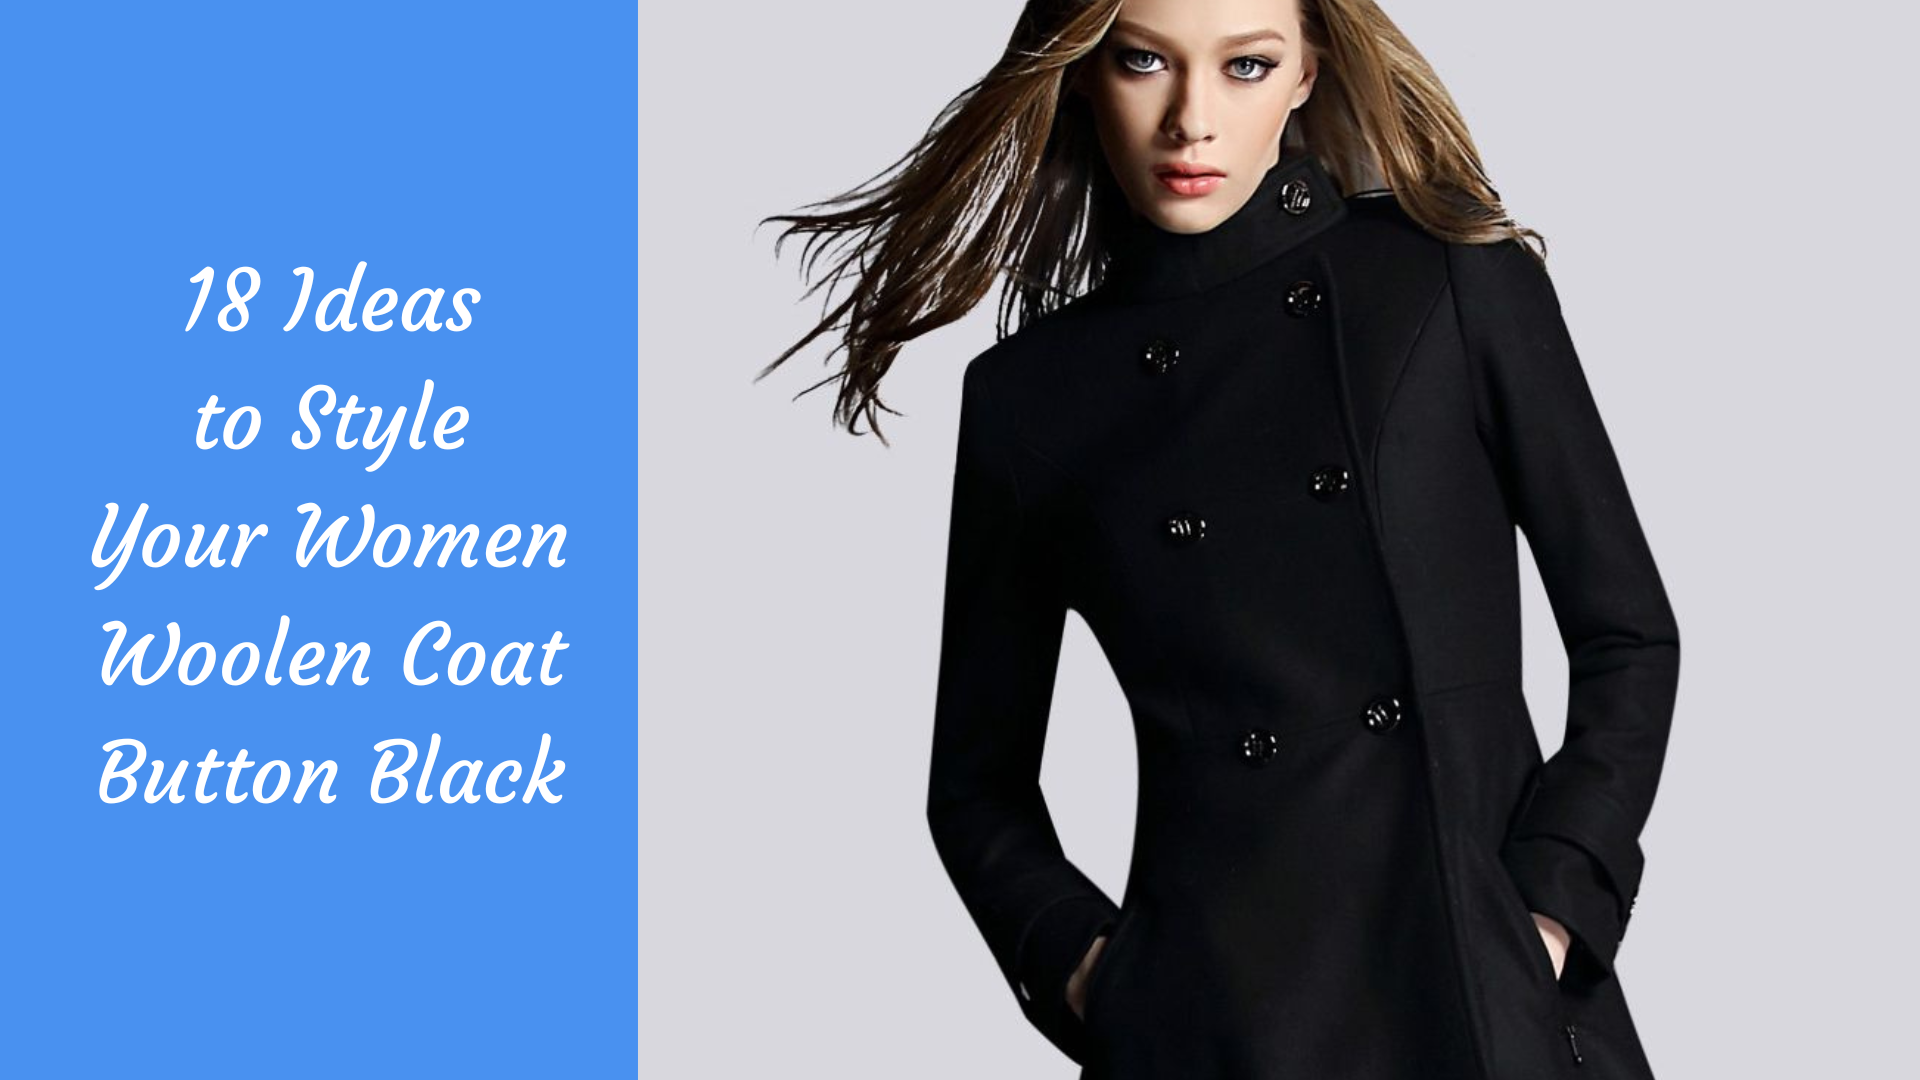 18 Ideas to Style Your Women Woolen Coat Button Black - The Kosha Journal